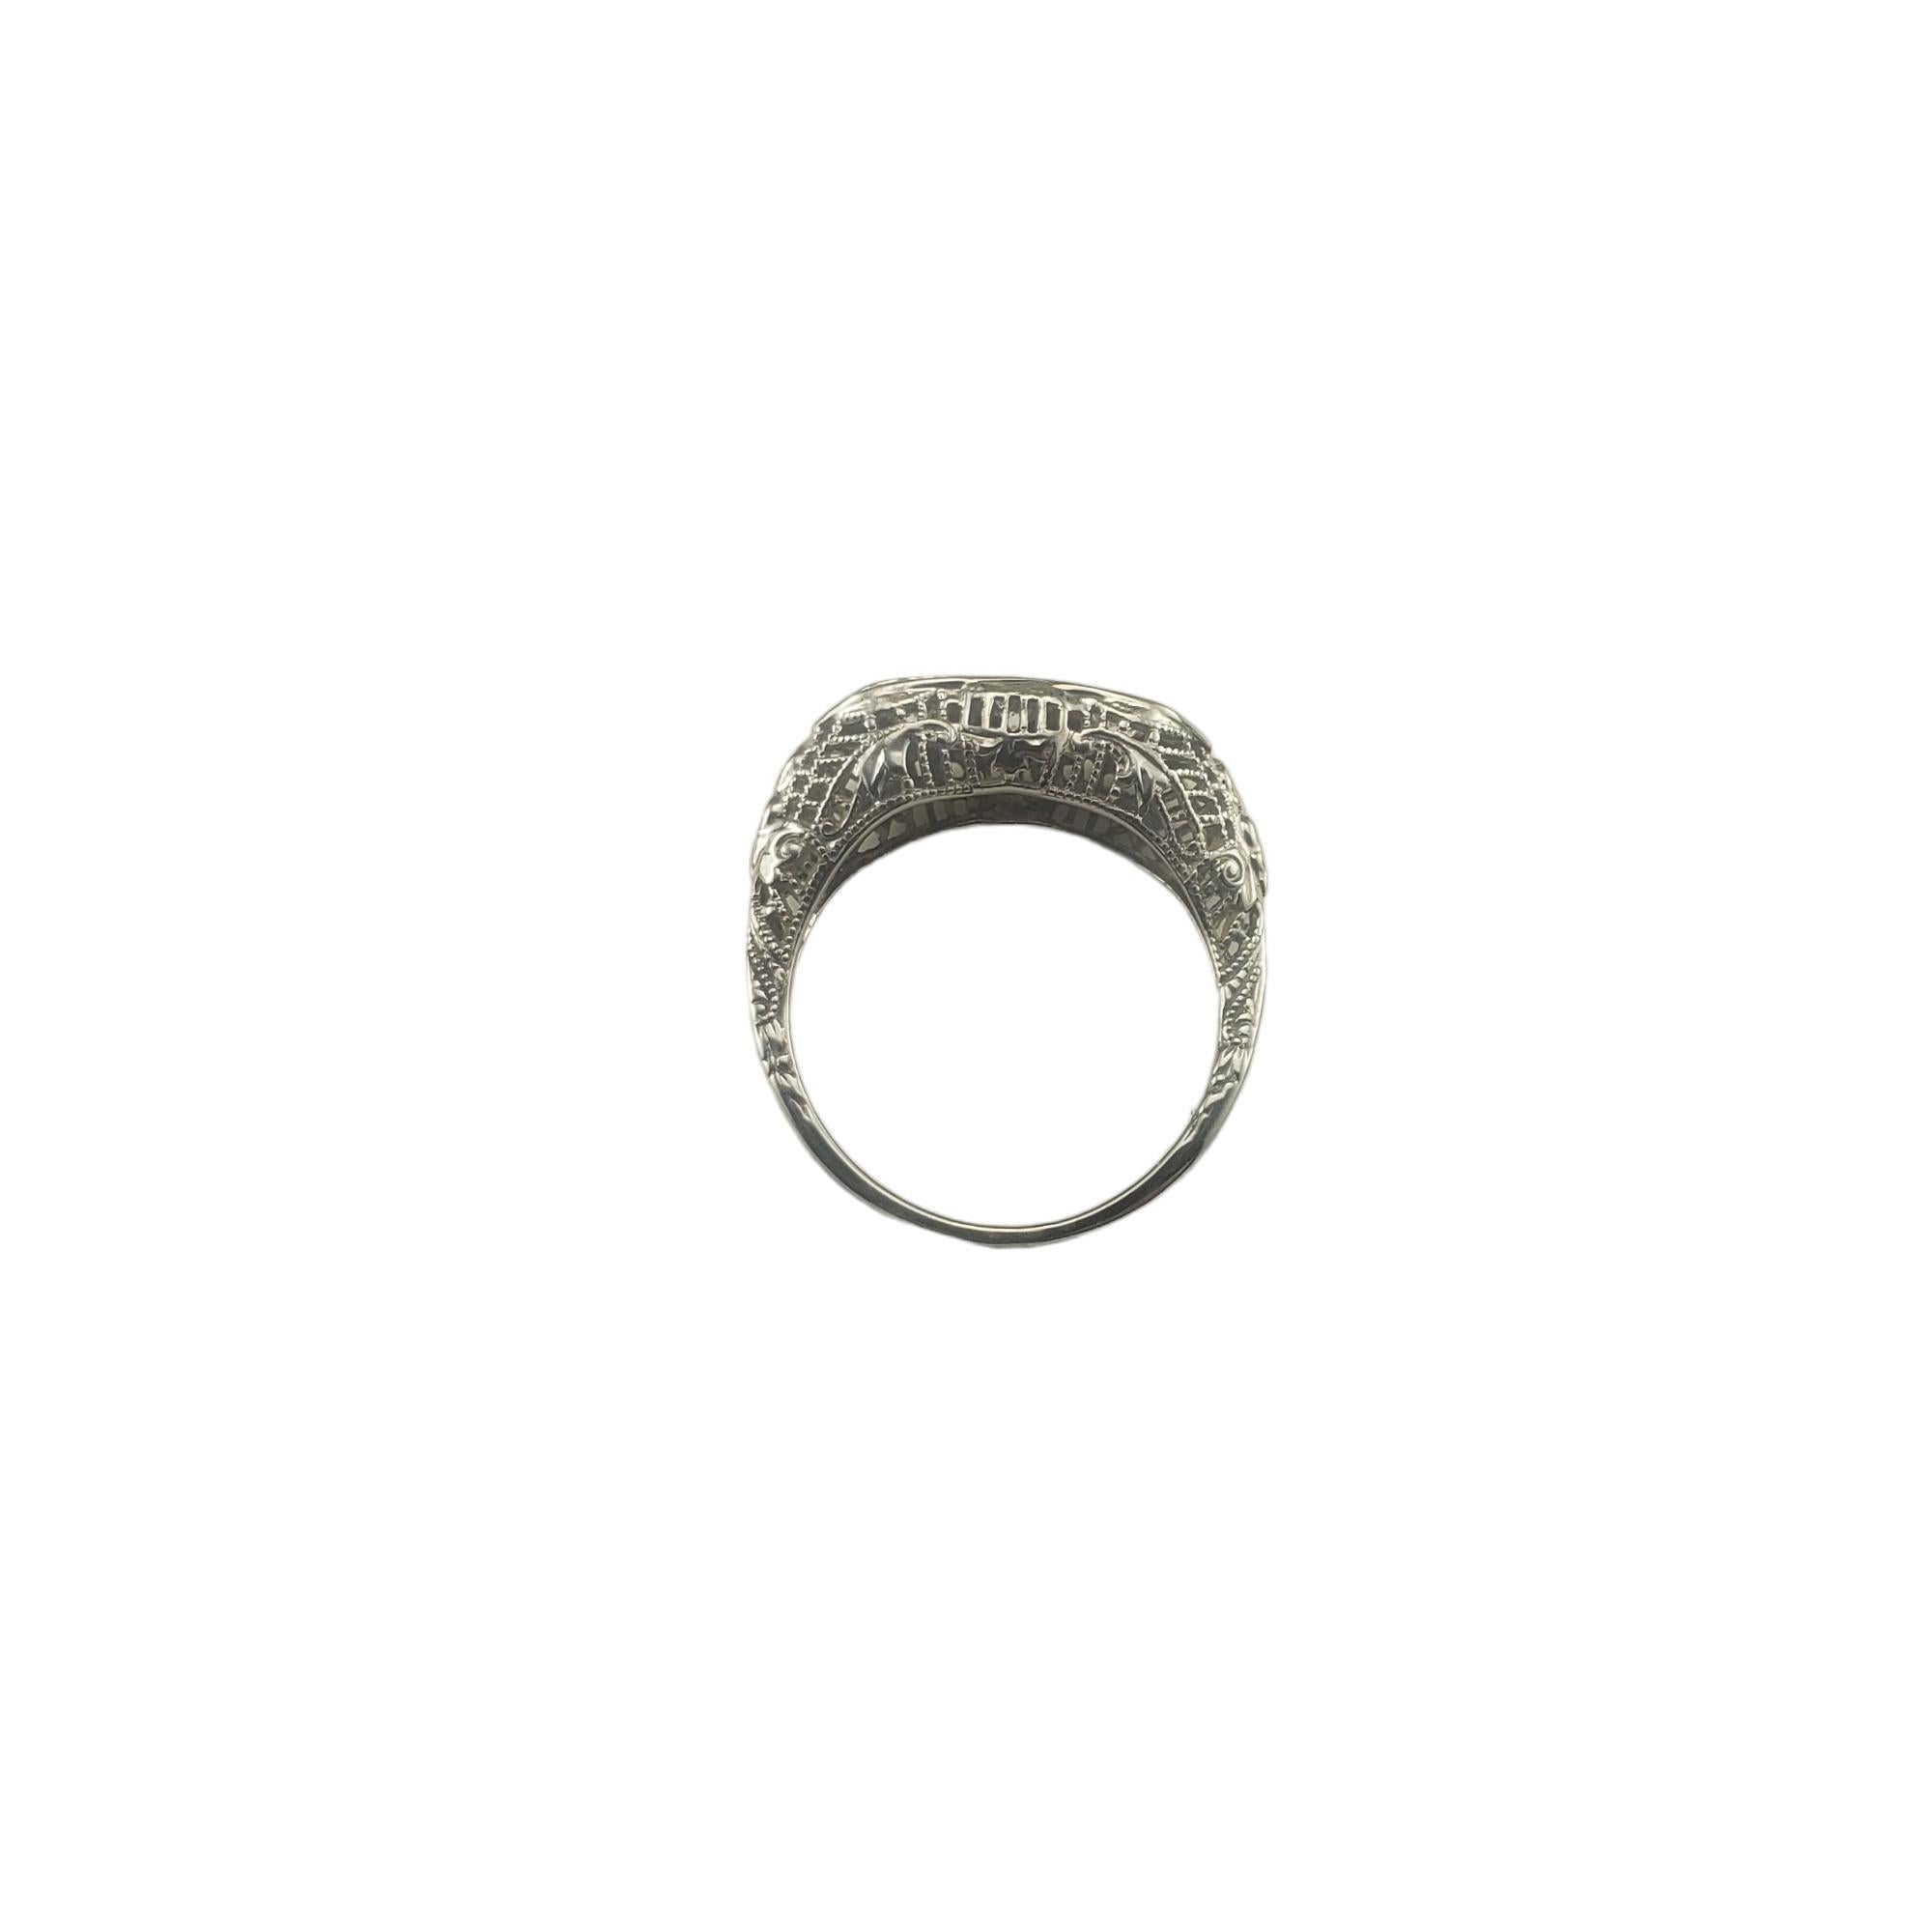 Women's 18 Karat White Gold Filigree and Diamond Ring Size 5.5-5.75 #16754 For Sale